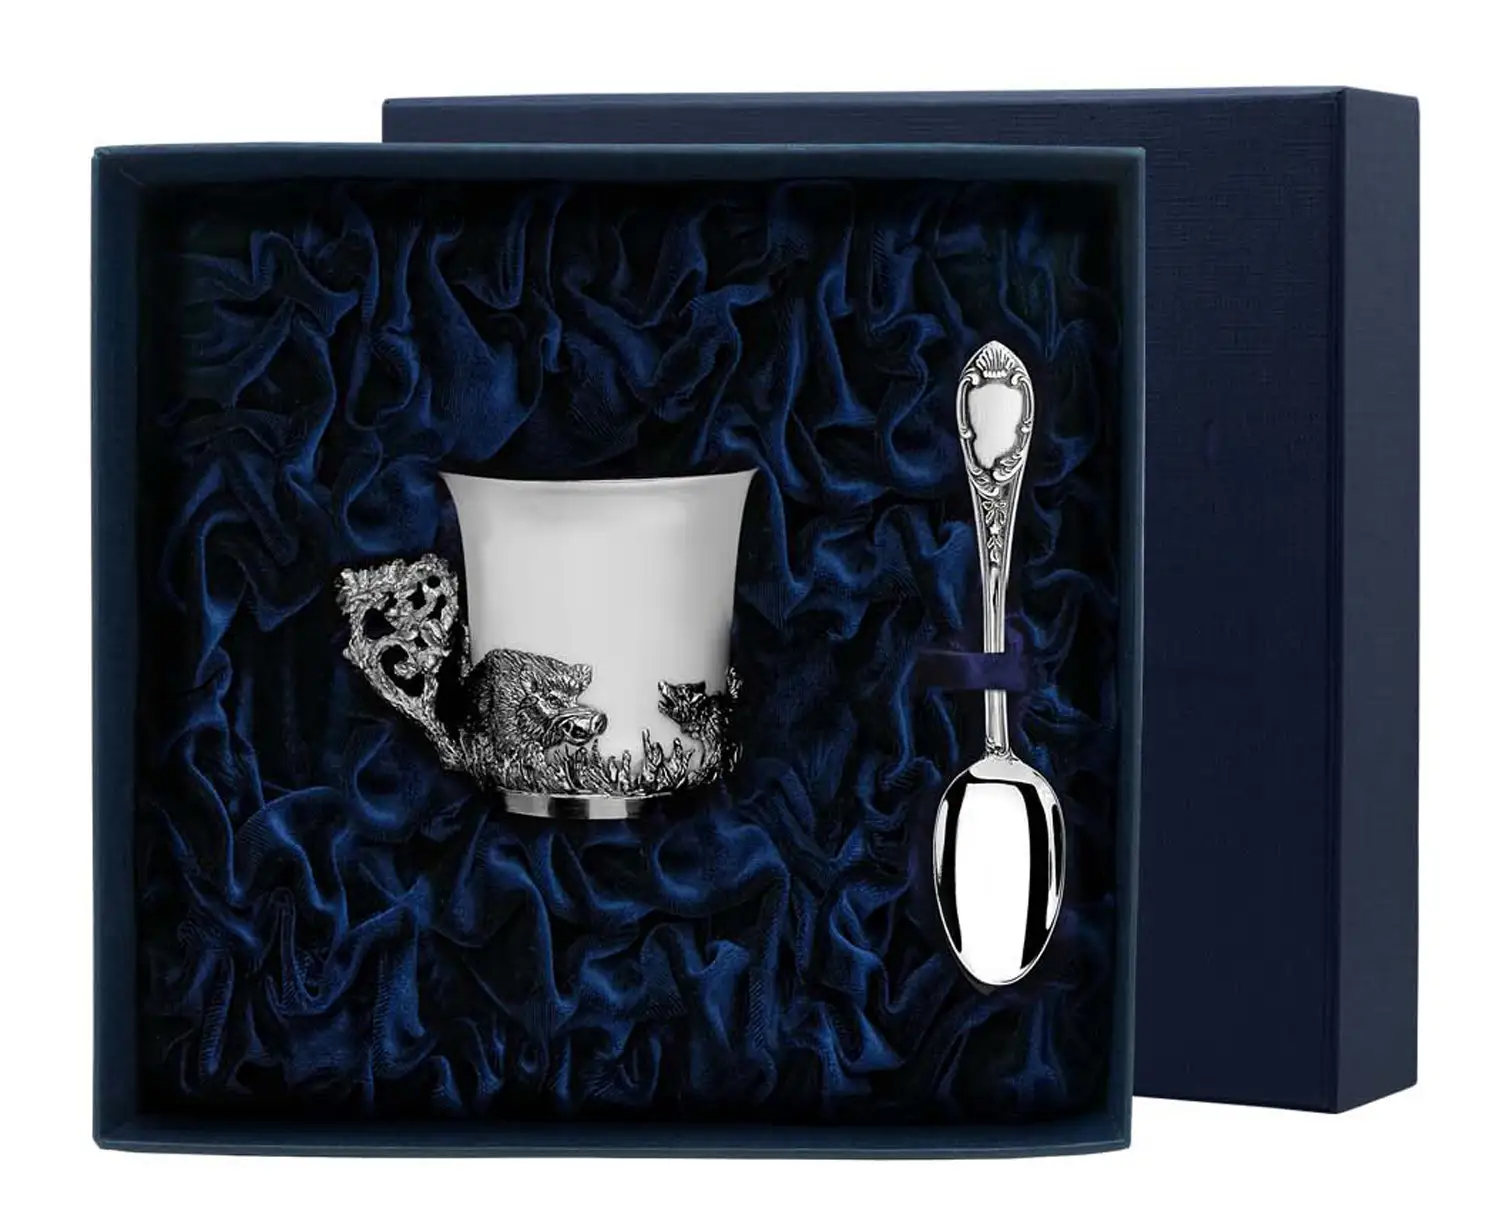 Набор кофейная чашка Кабан: ложка, чашка (Серебро 925) набор кофейная чашка роза ложка чашка серебро 925